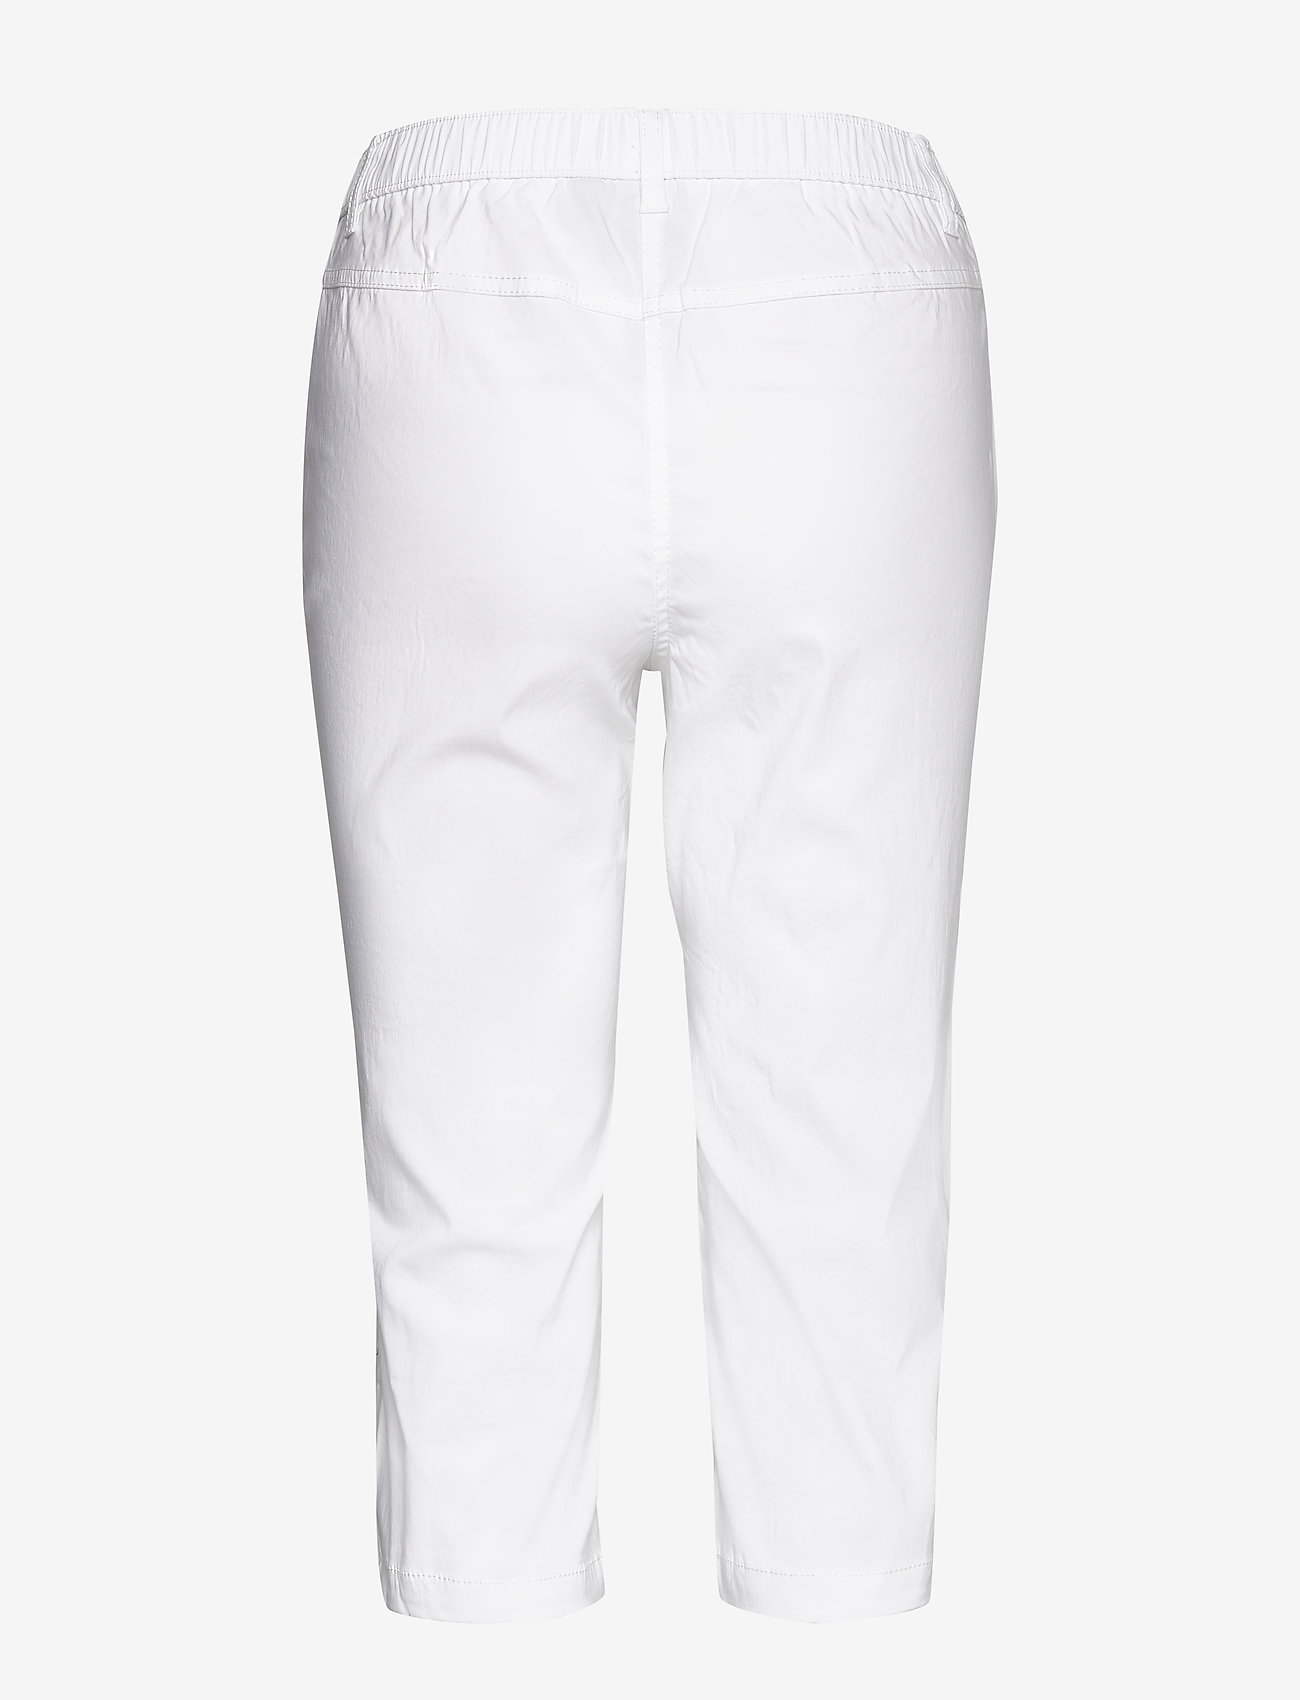 Brandtex - Capri pants - capri pants - white - 1